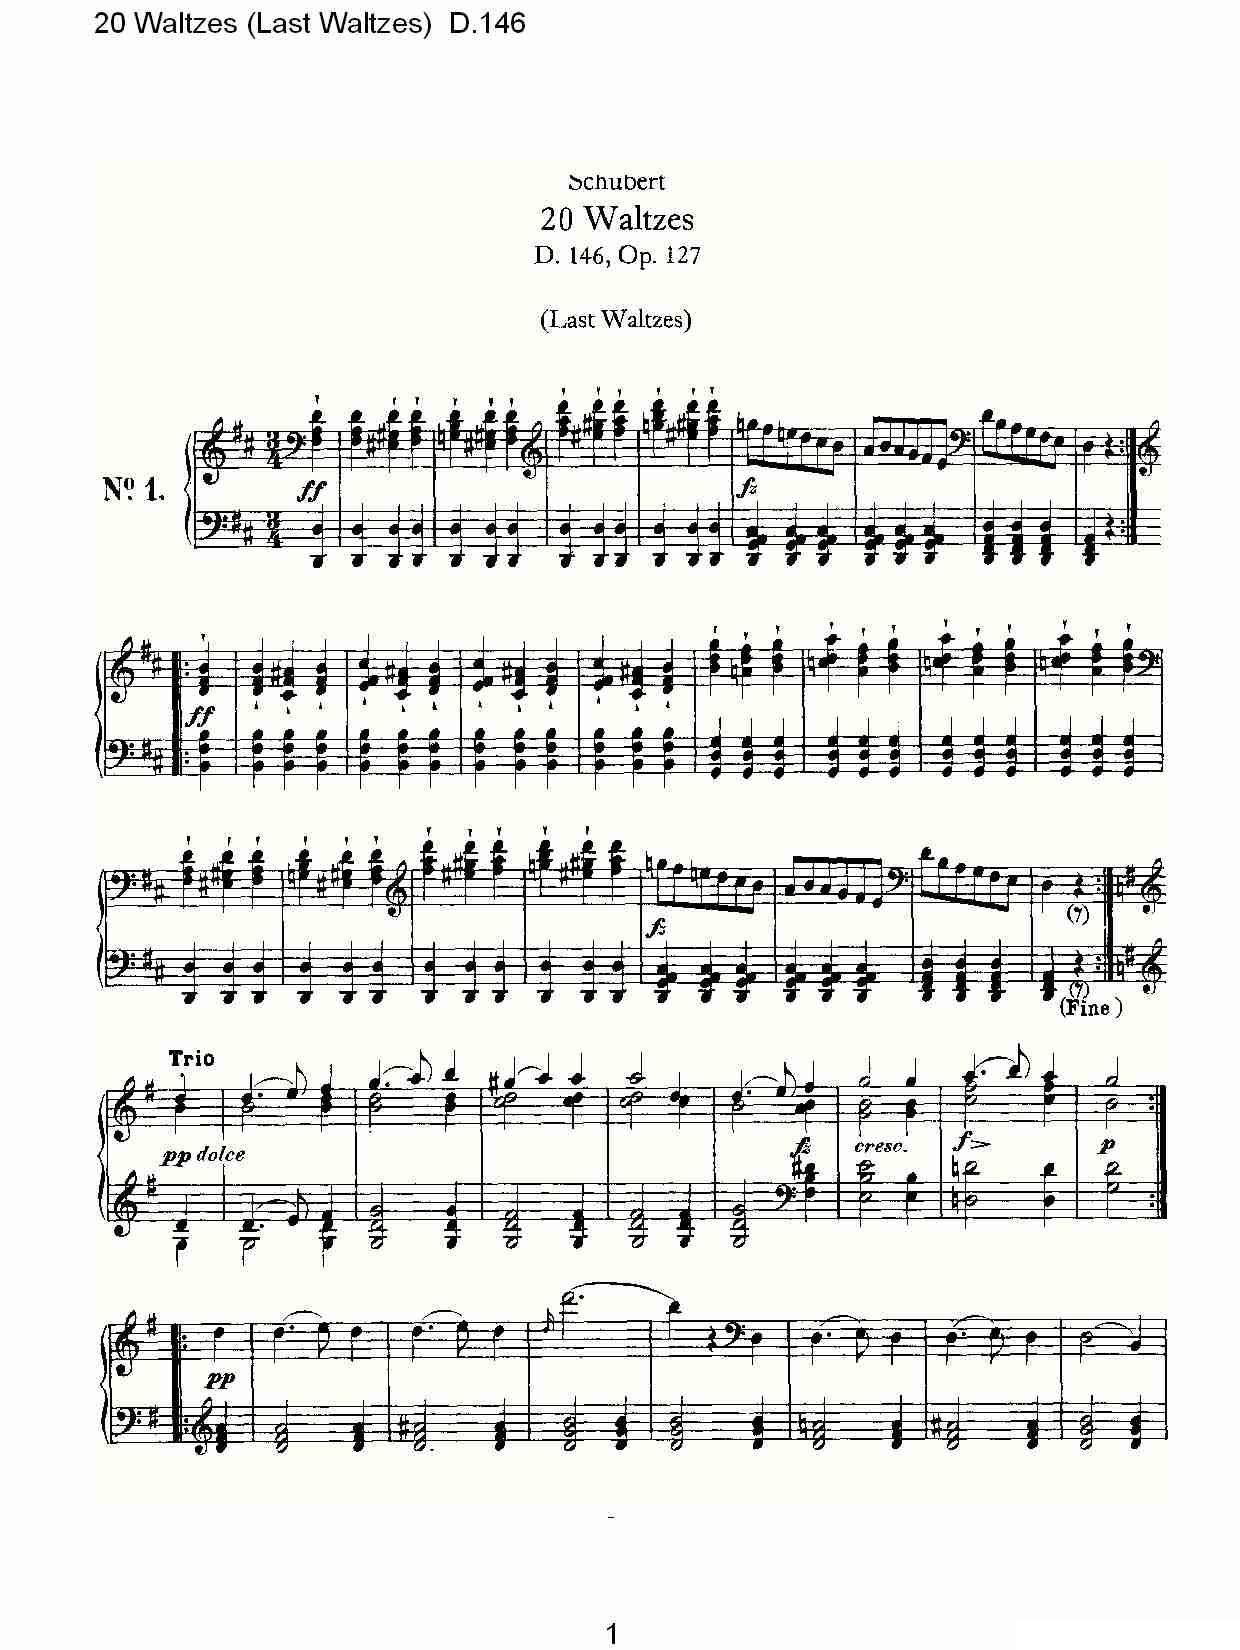 20 Waltzes（Last Waltzes) D.14）钢琴曲谱（图1）